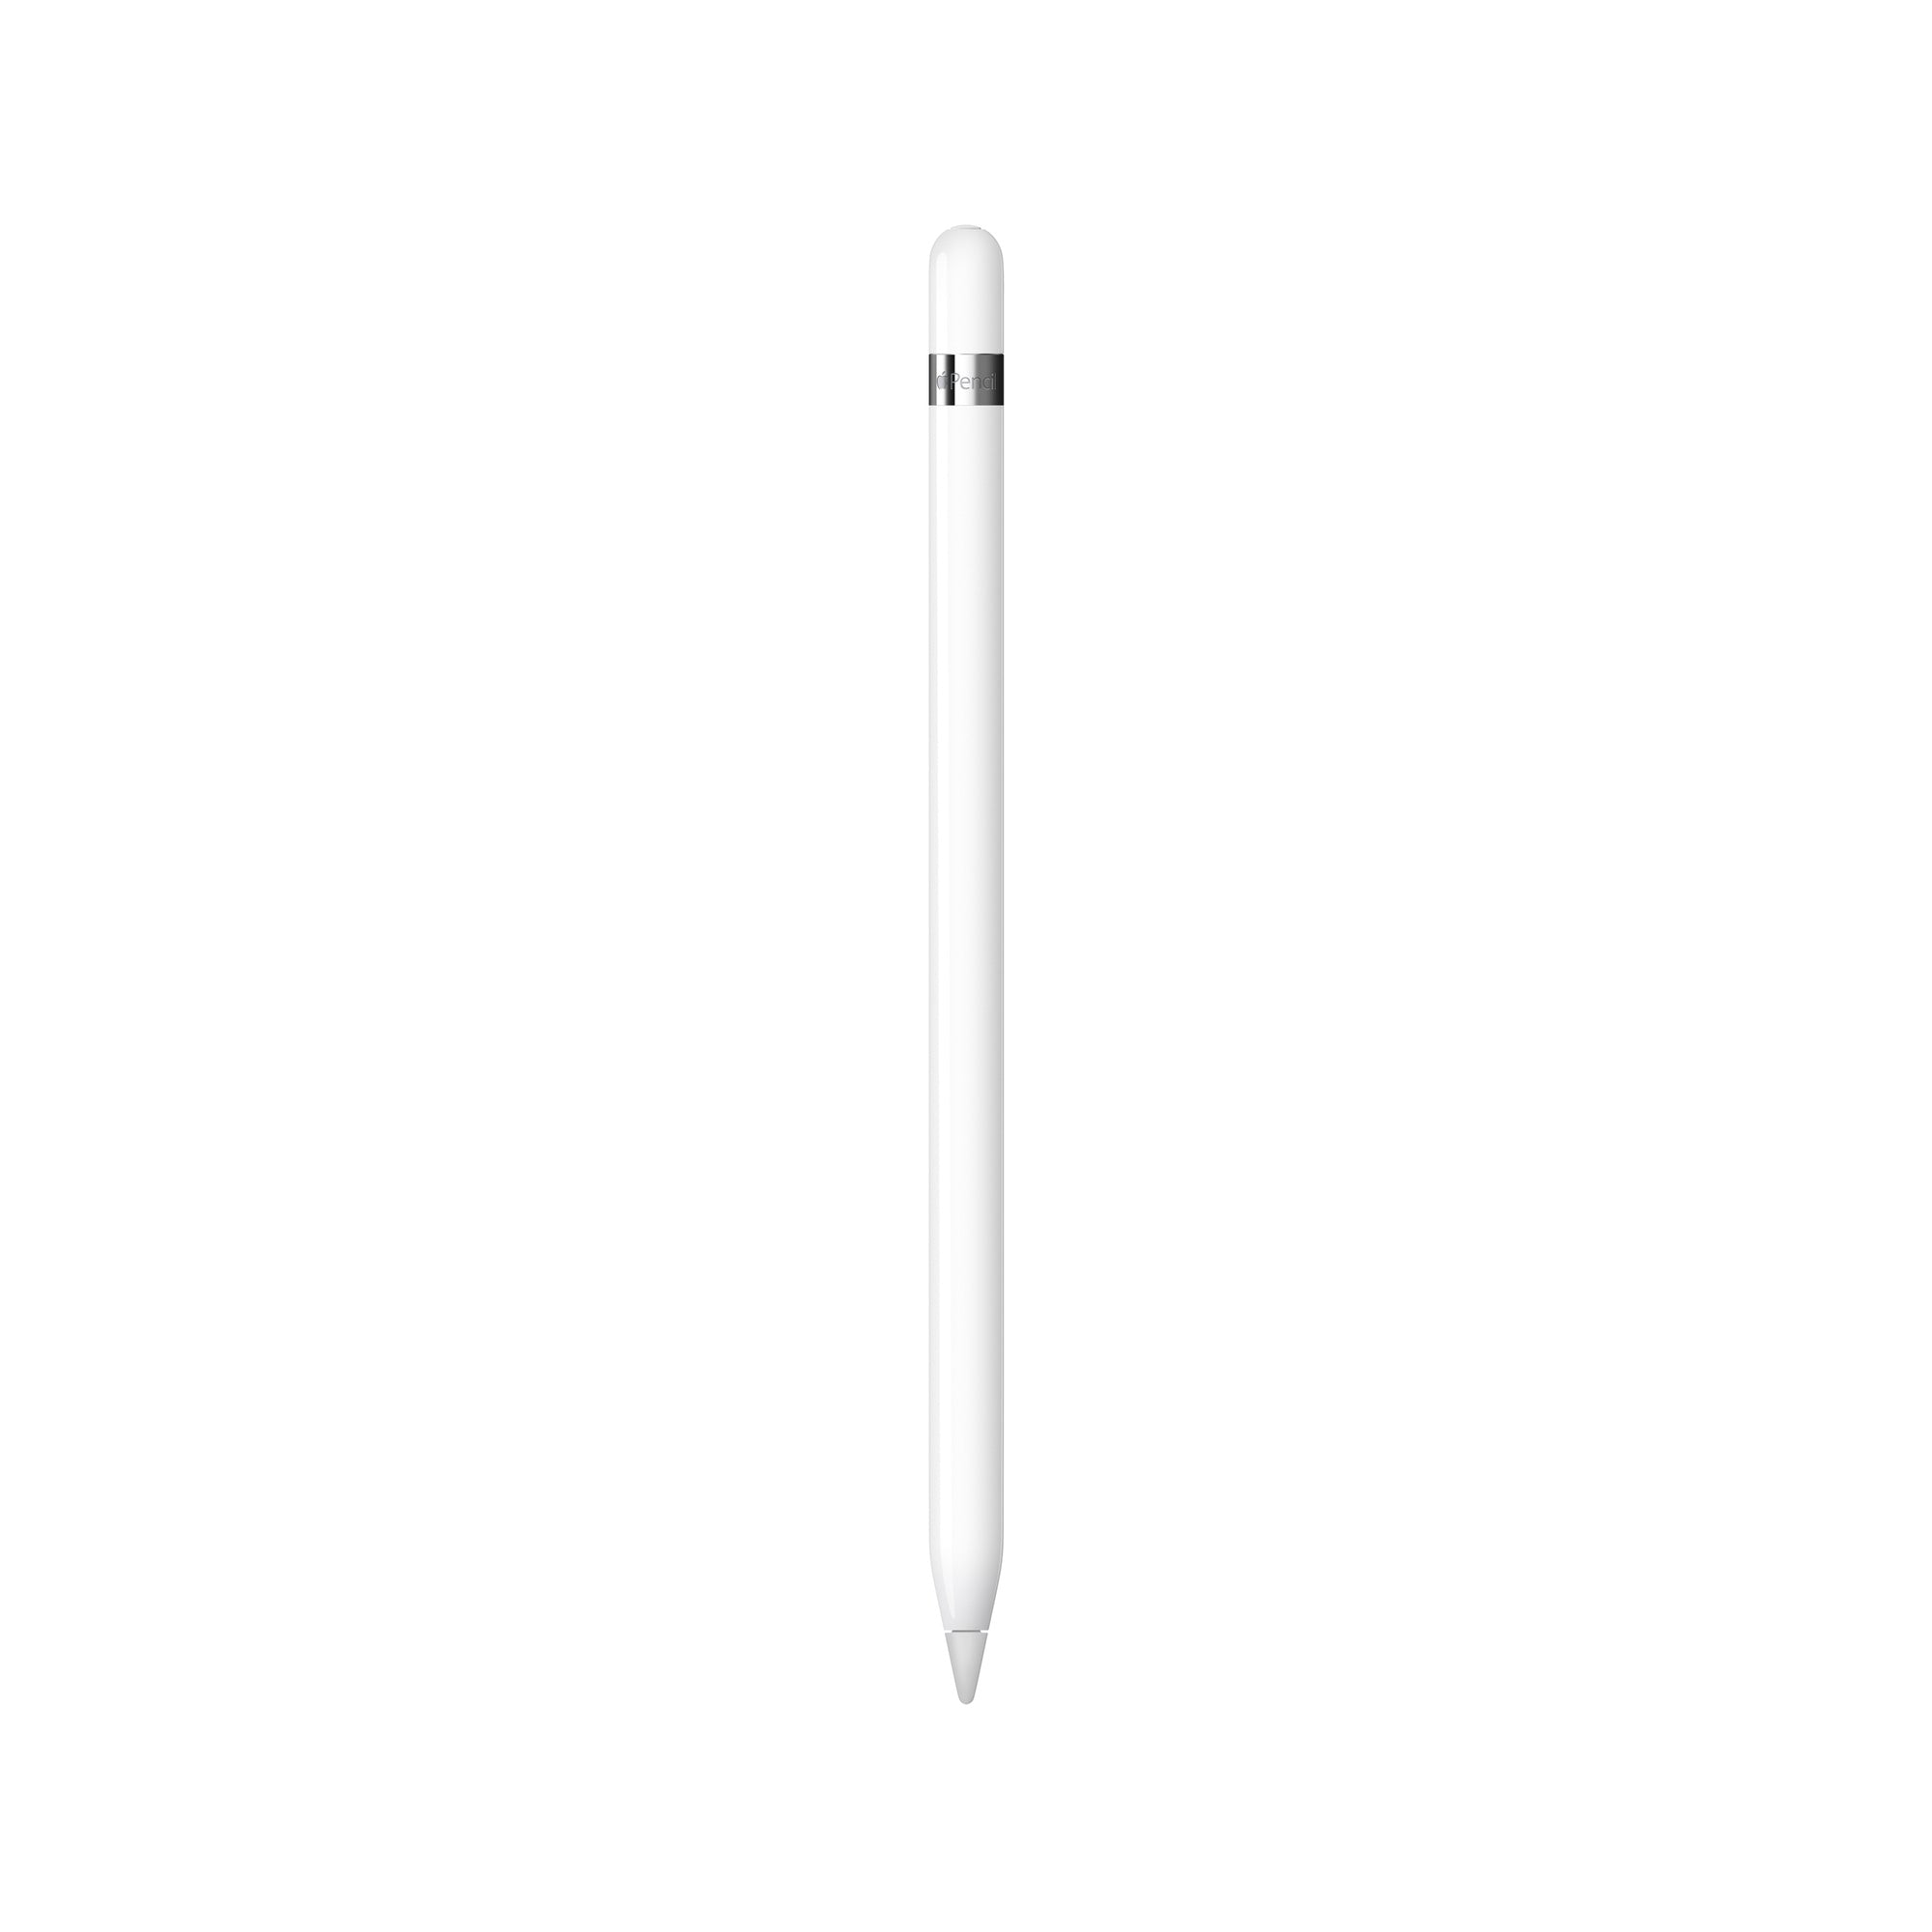 Apple Pencil 1st Gen White New - Sealed